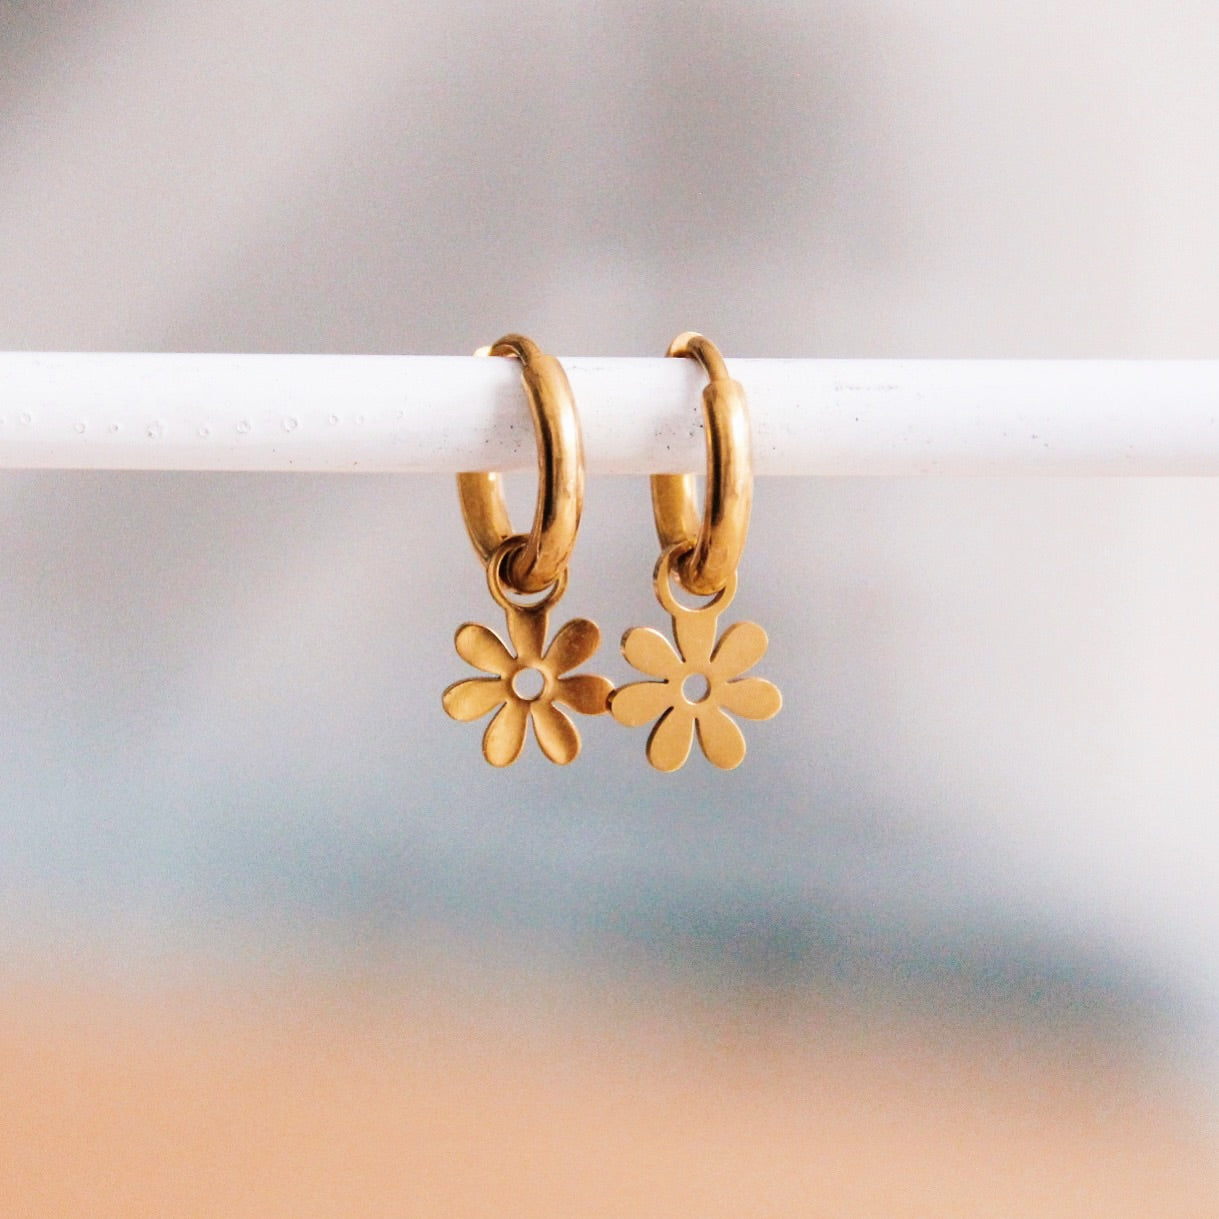 Stainless steel hoop earrings with daisy flower - Gold - CB358